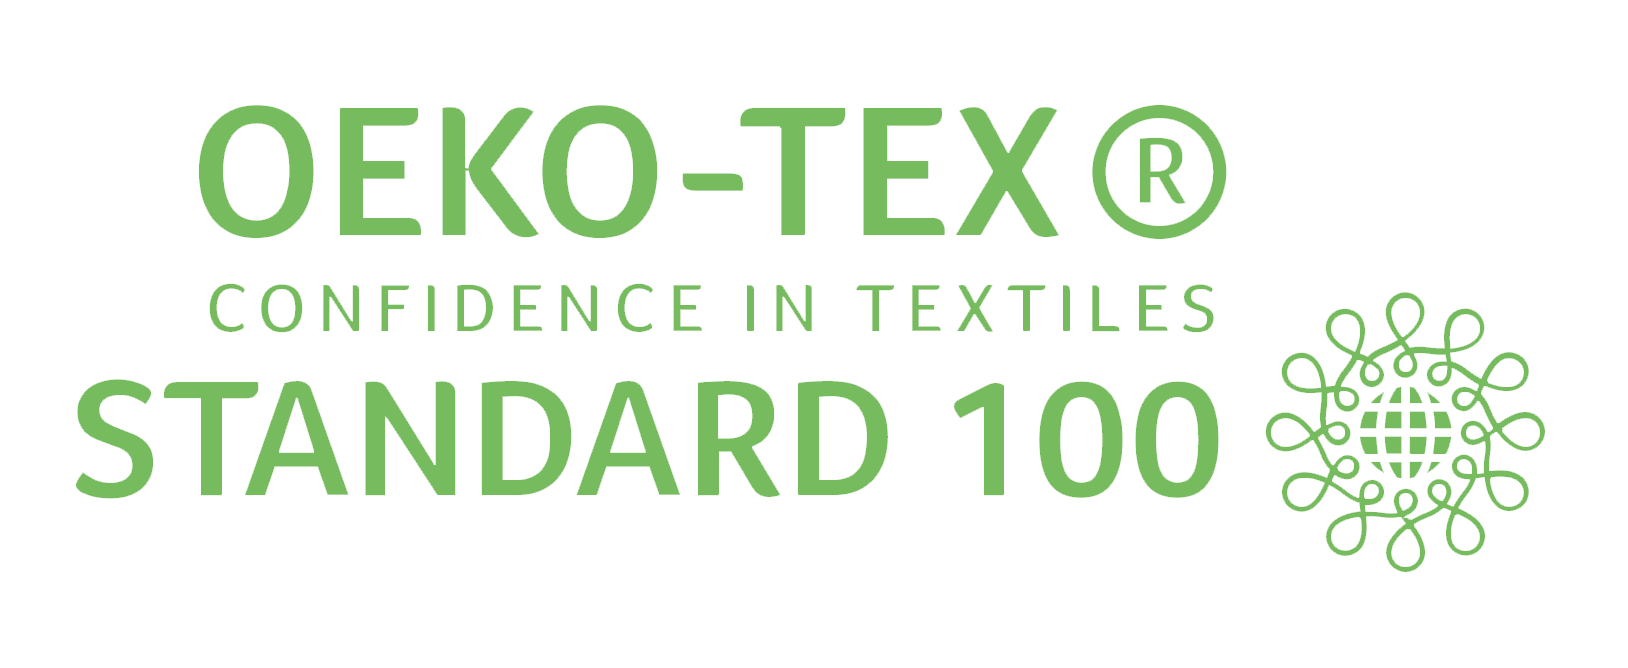 Eoko-Tex Standard 100.png